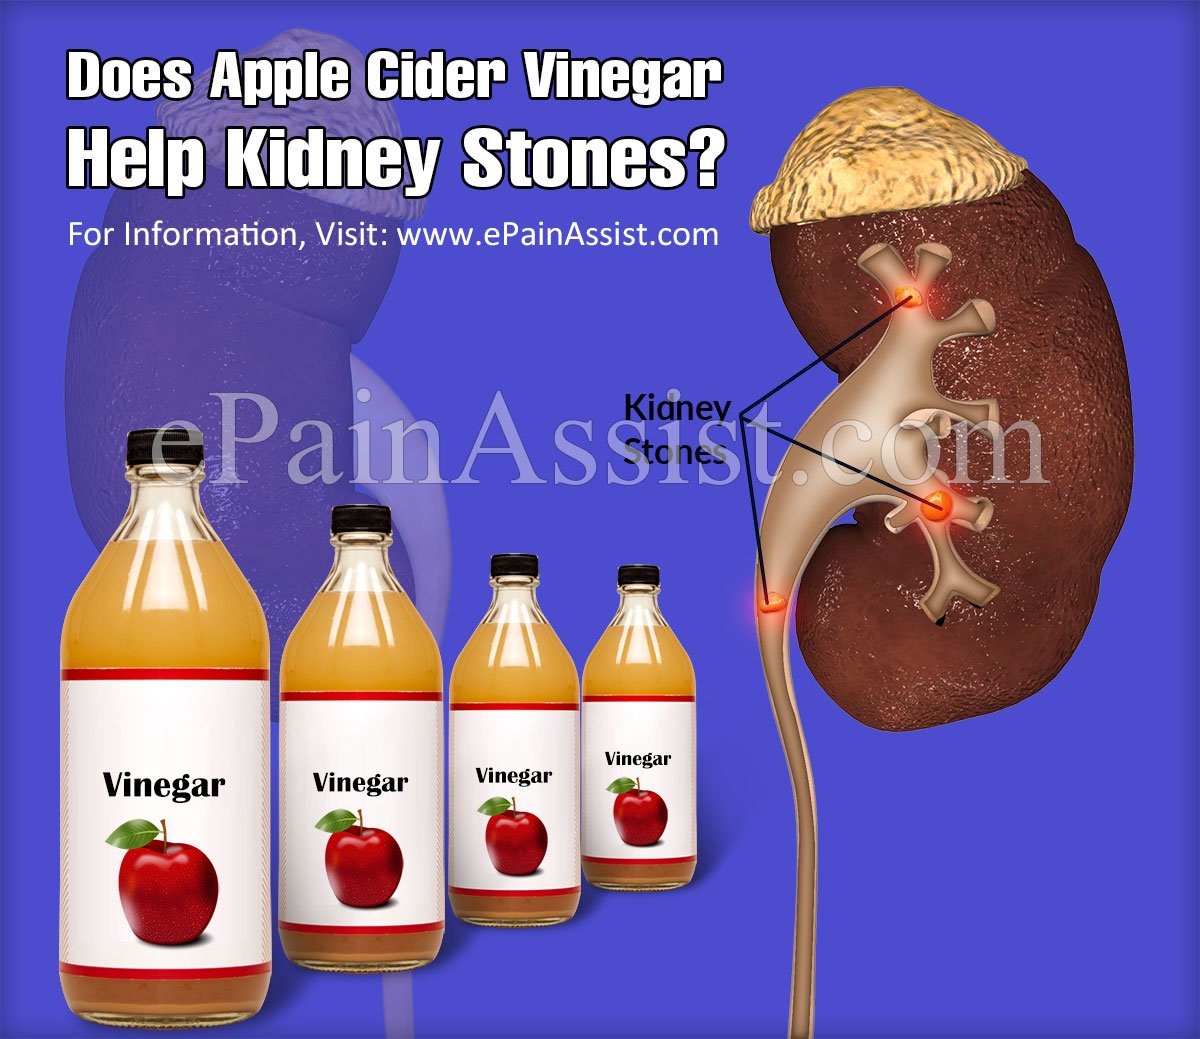 Does Apple Cider Vinegar help Kidney Stones?